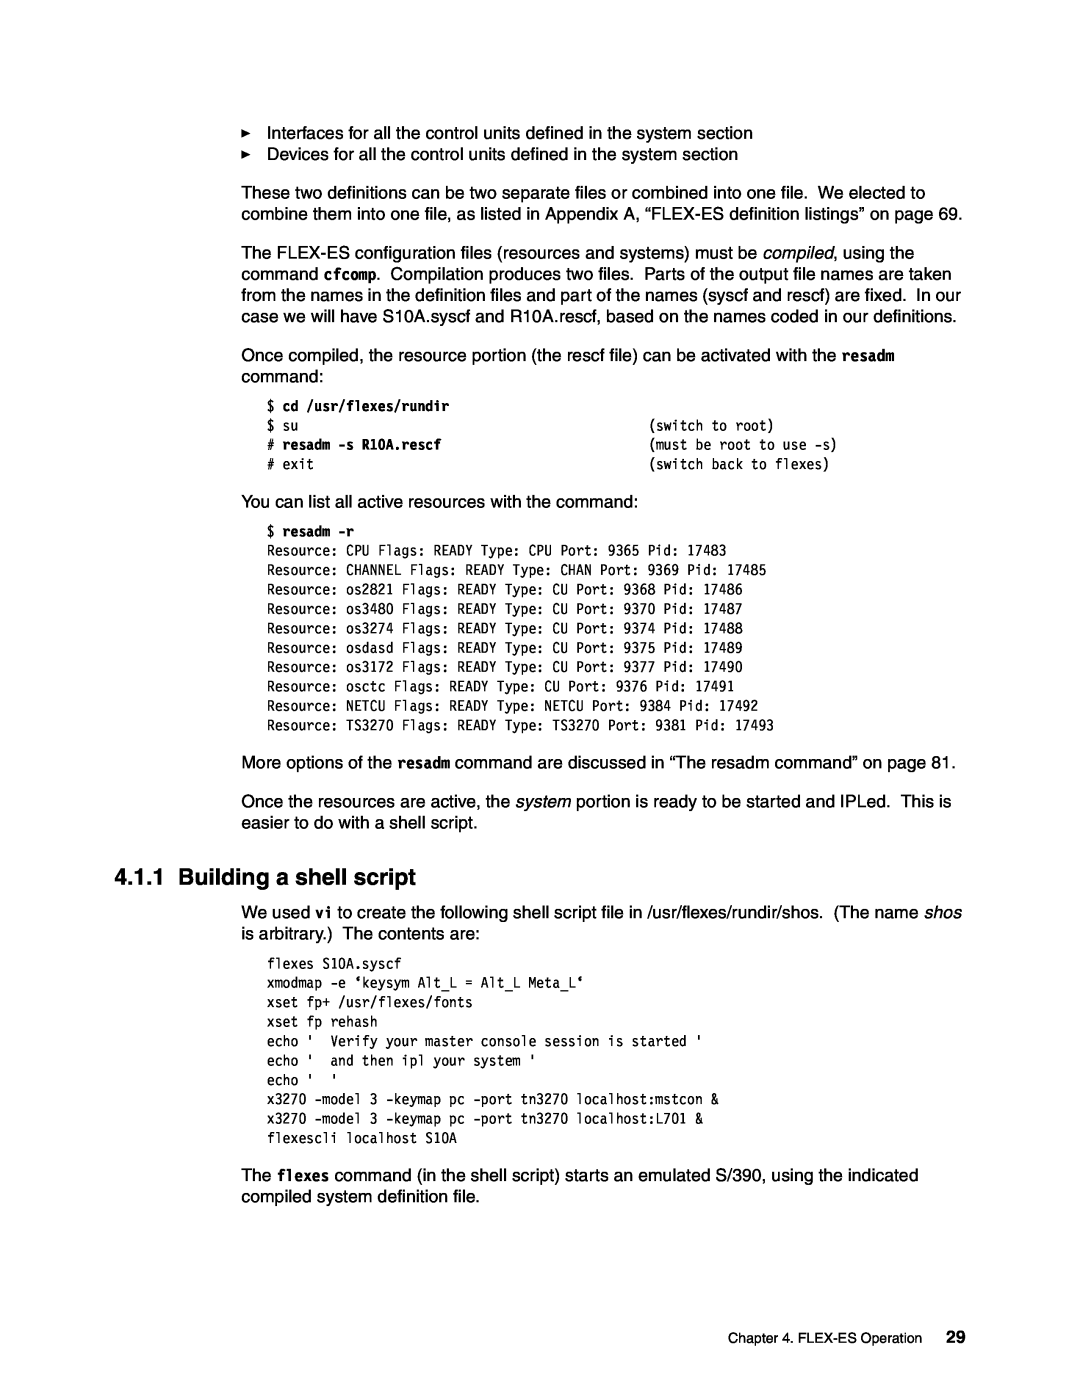 IBM s/390 manual Building a shell script 